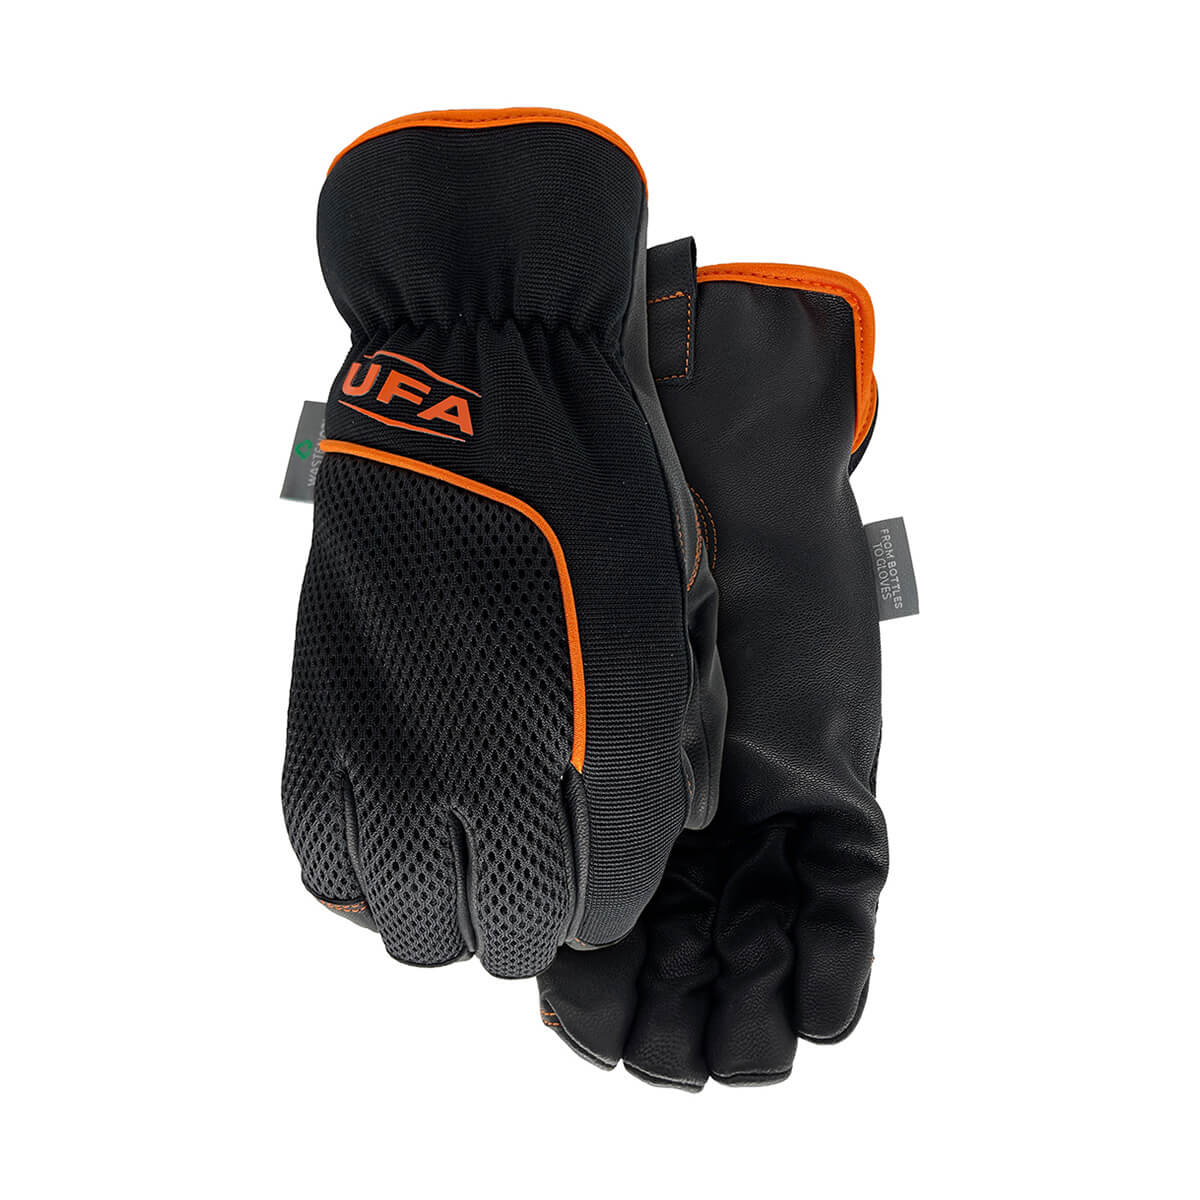 UFA Slip-On Performance Gloves - Black